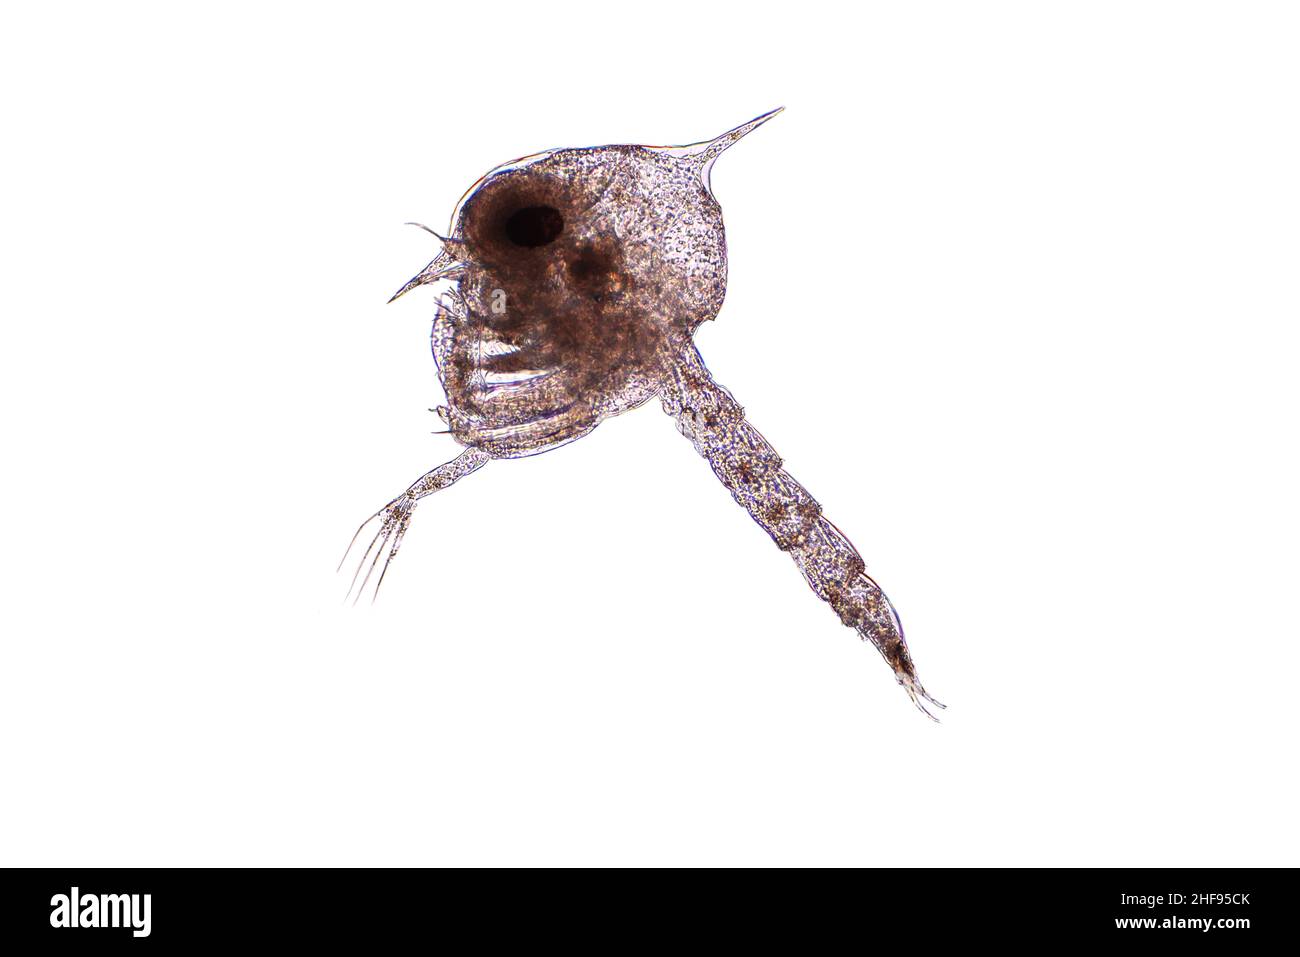 Larva de cangrejo, micrografía ligera Foto de stock